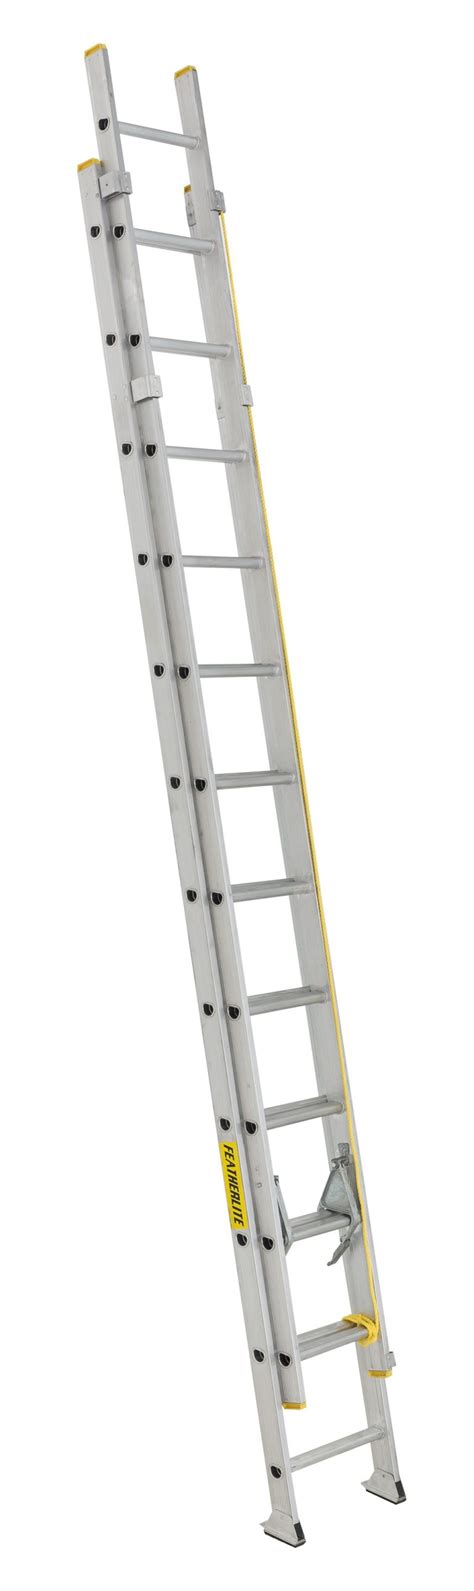 Featherlite 8 Yellow Fiberglass Step Ladder 300 Lb Type 1a